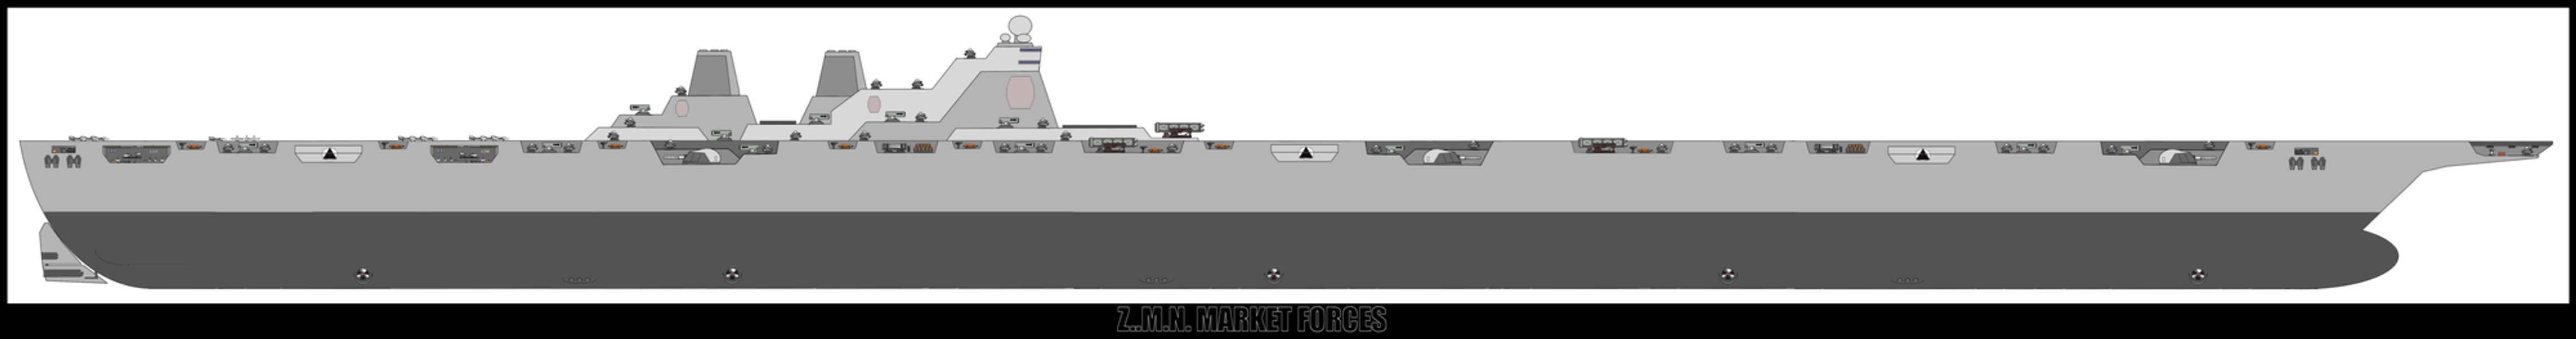 Market_Forces_Carrier_by_Doc_Evilonavich.png